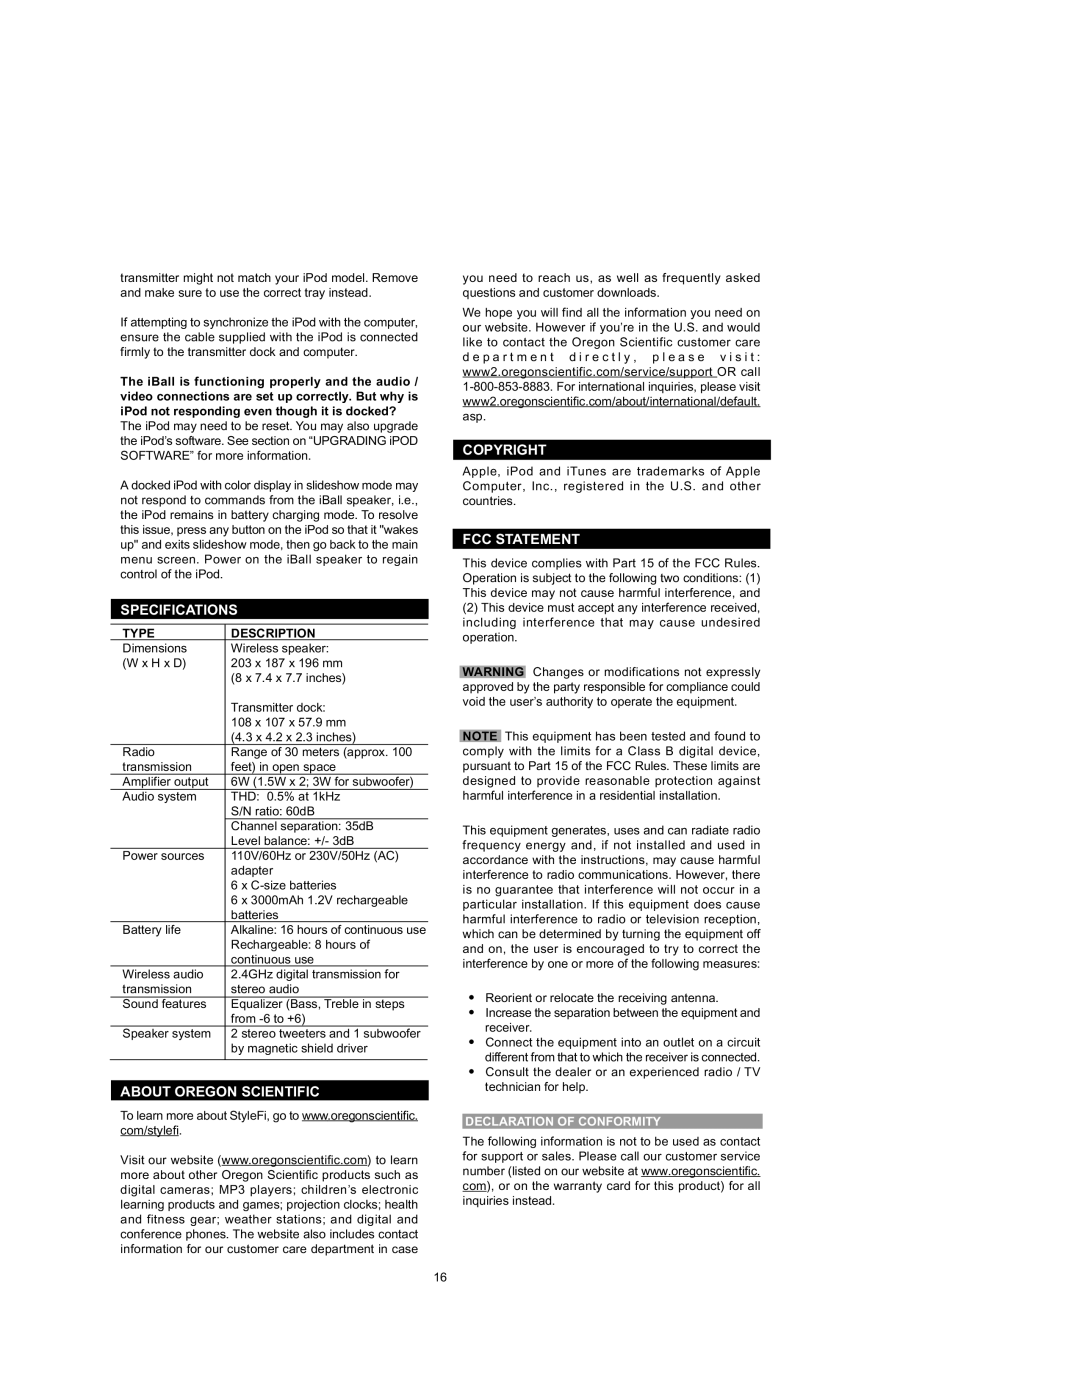 Oregon Scientific IB368 Specifications, About Oregon Scientific, Copyright, Fcc Statement, Type, Description 